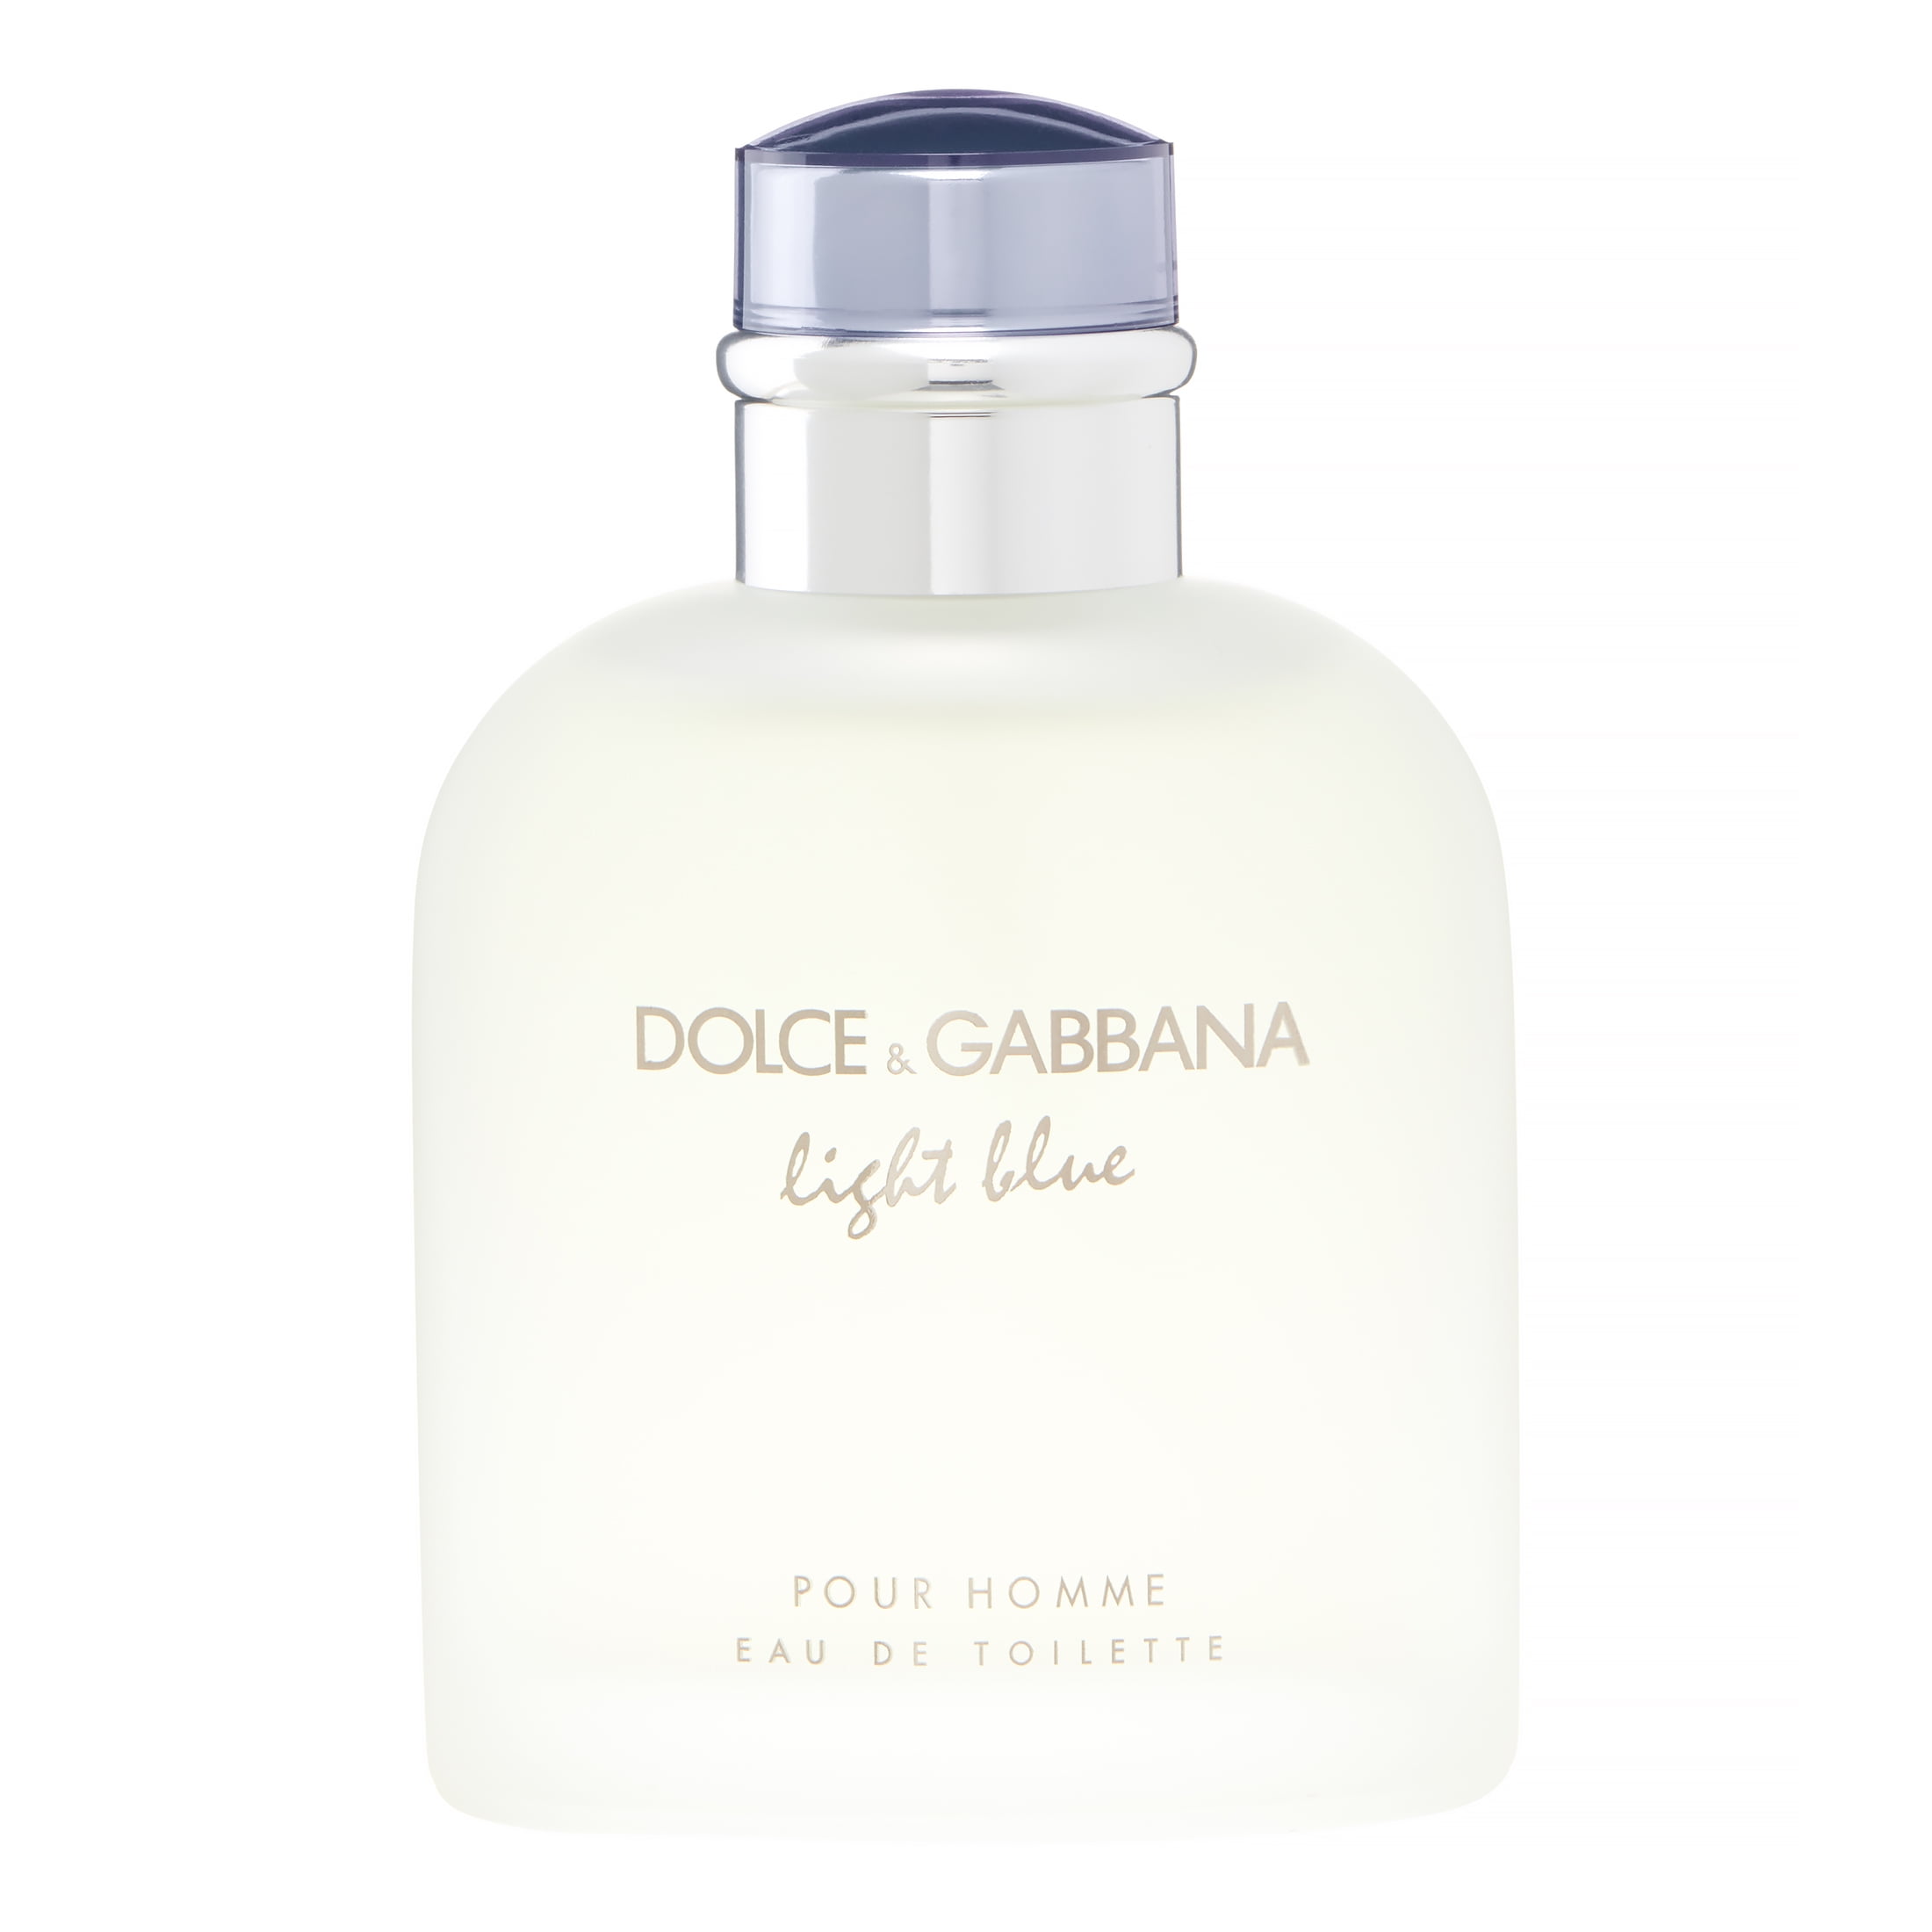 Dolce & Gabbana Light Blue Eau de Toilette Spray - 2.5 oz.